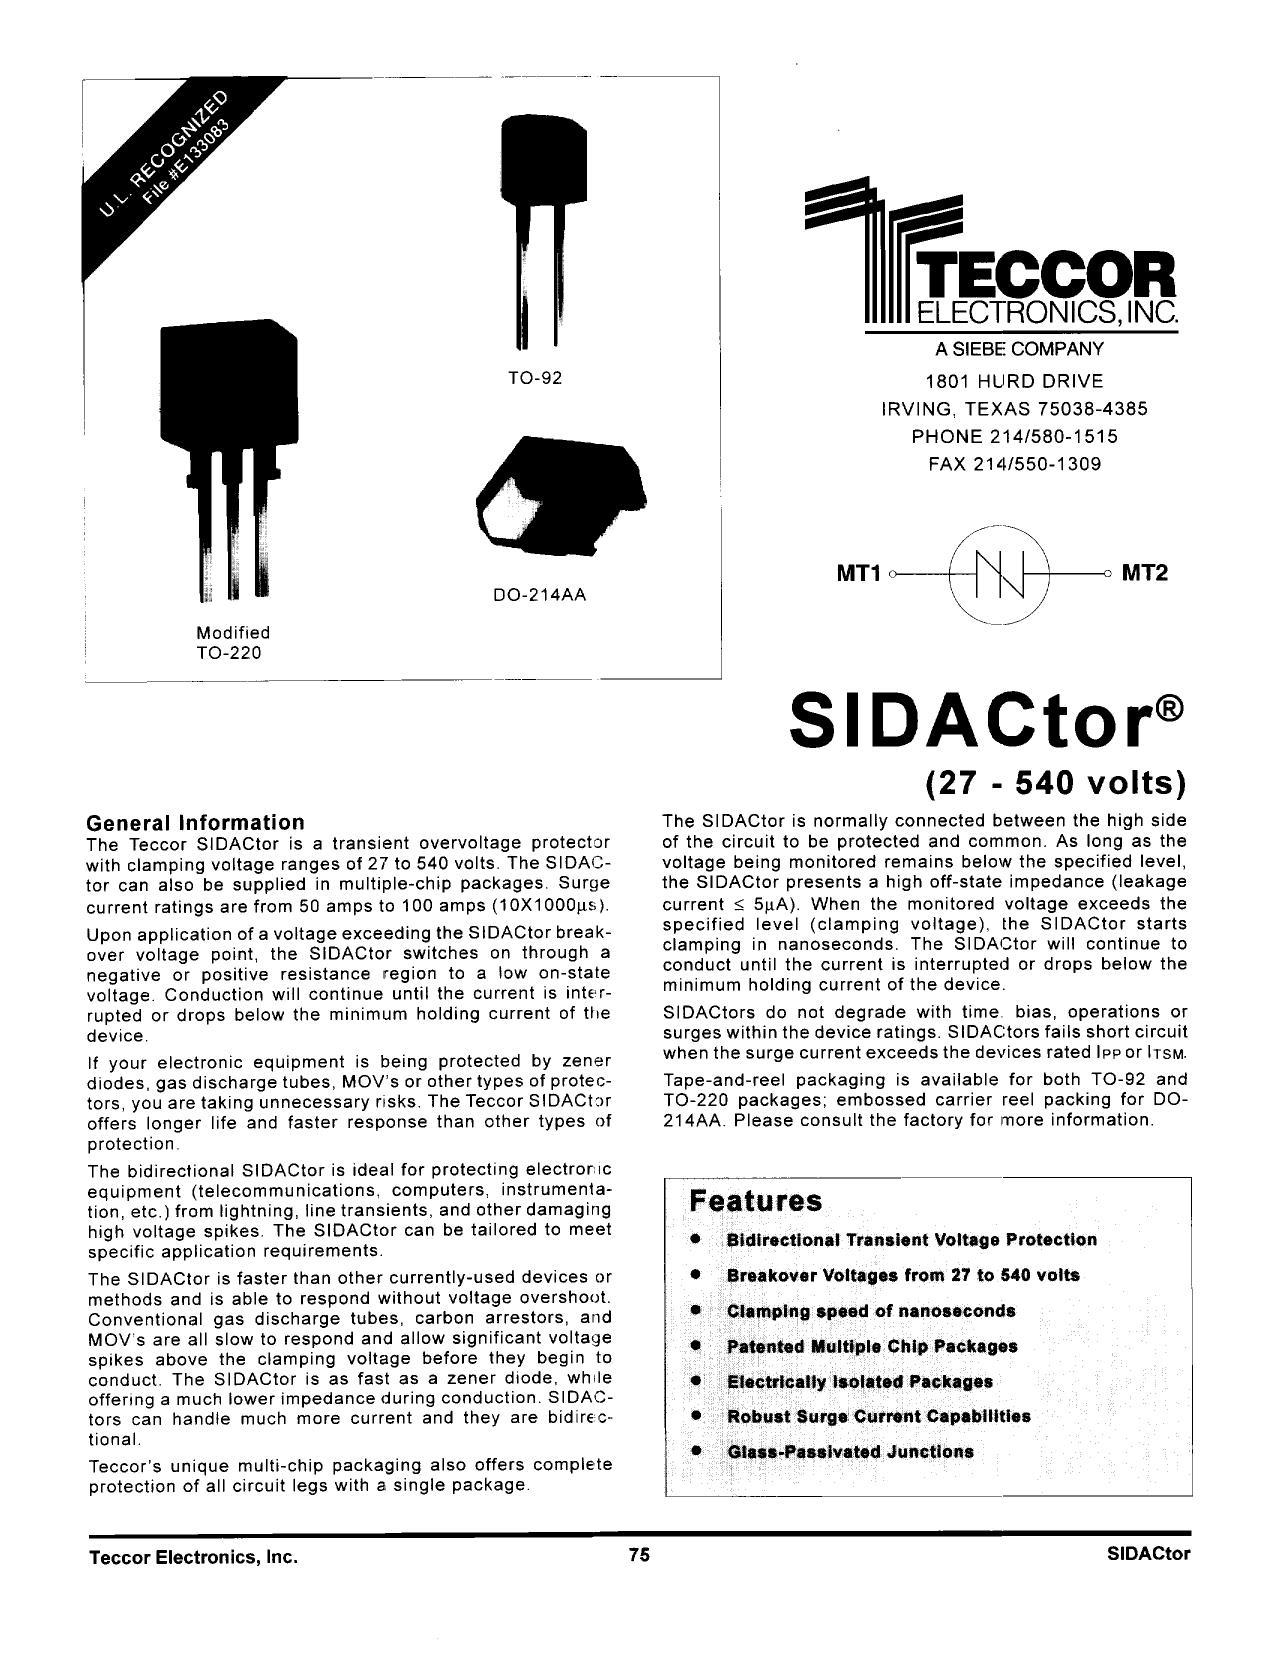 teccor-electronics-sidactor-datasheet.pdf